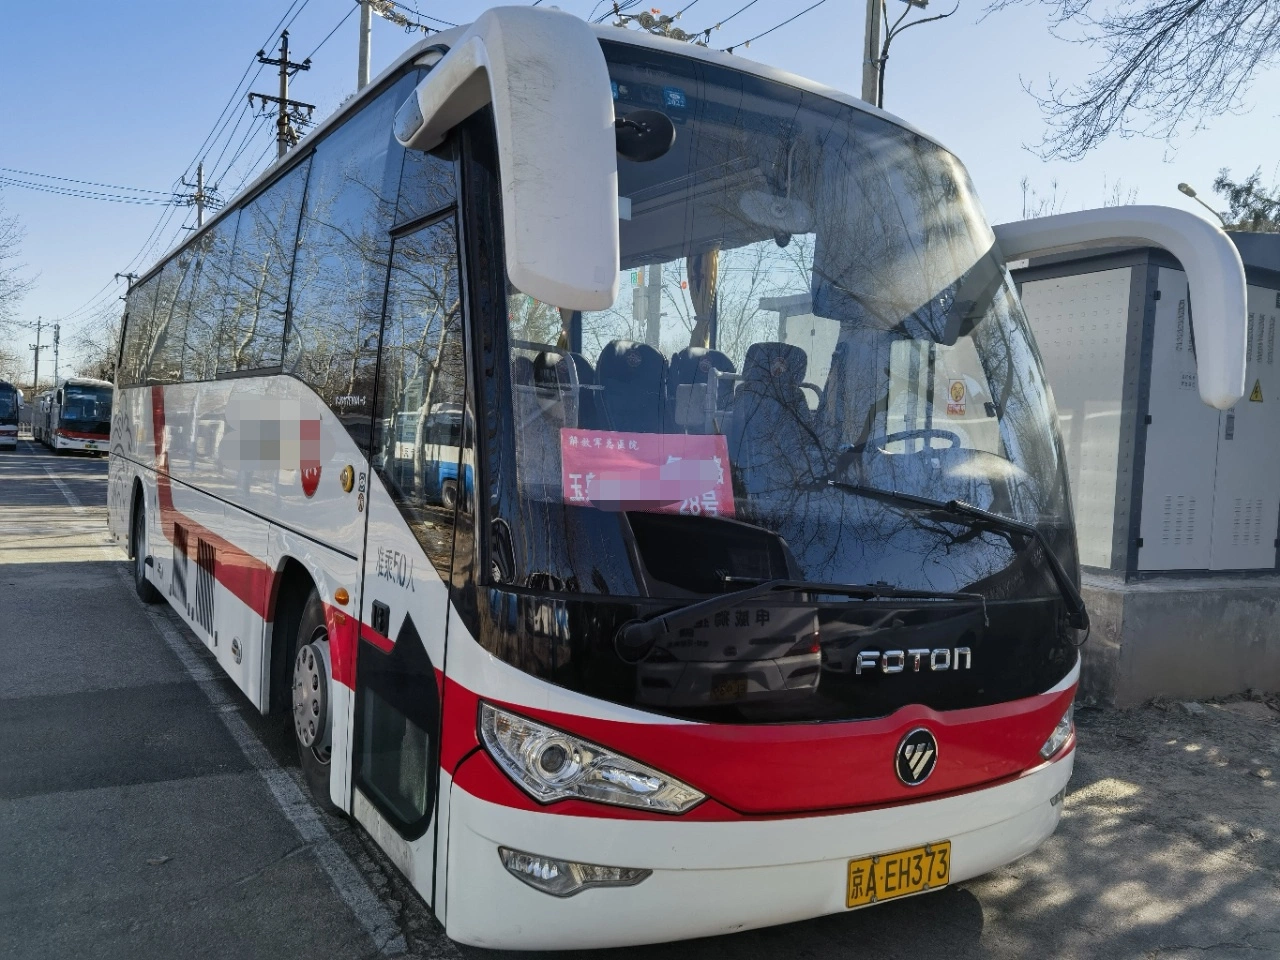 Pure Electric Bus, New Energy Hydrogen Electric Long Public Passenger City Bus, equipado con 48 asientos, coche usado.